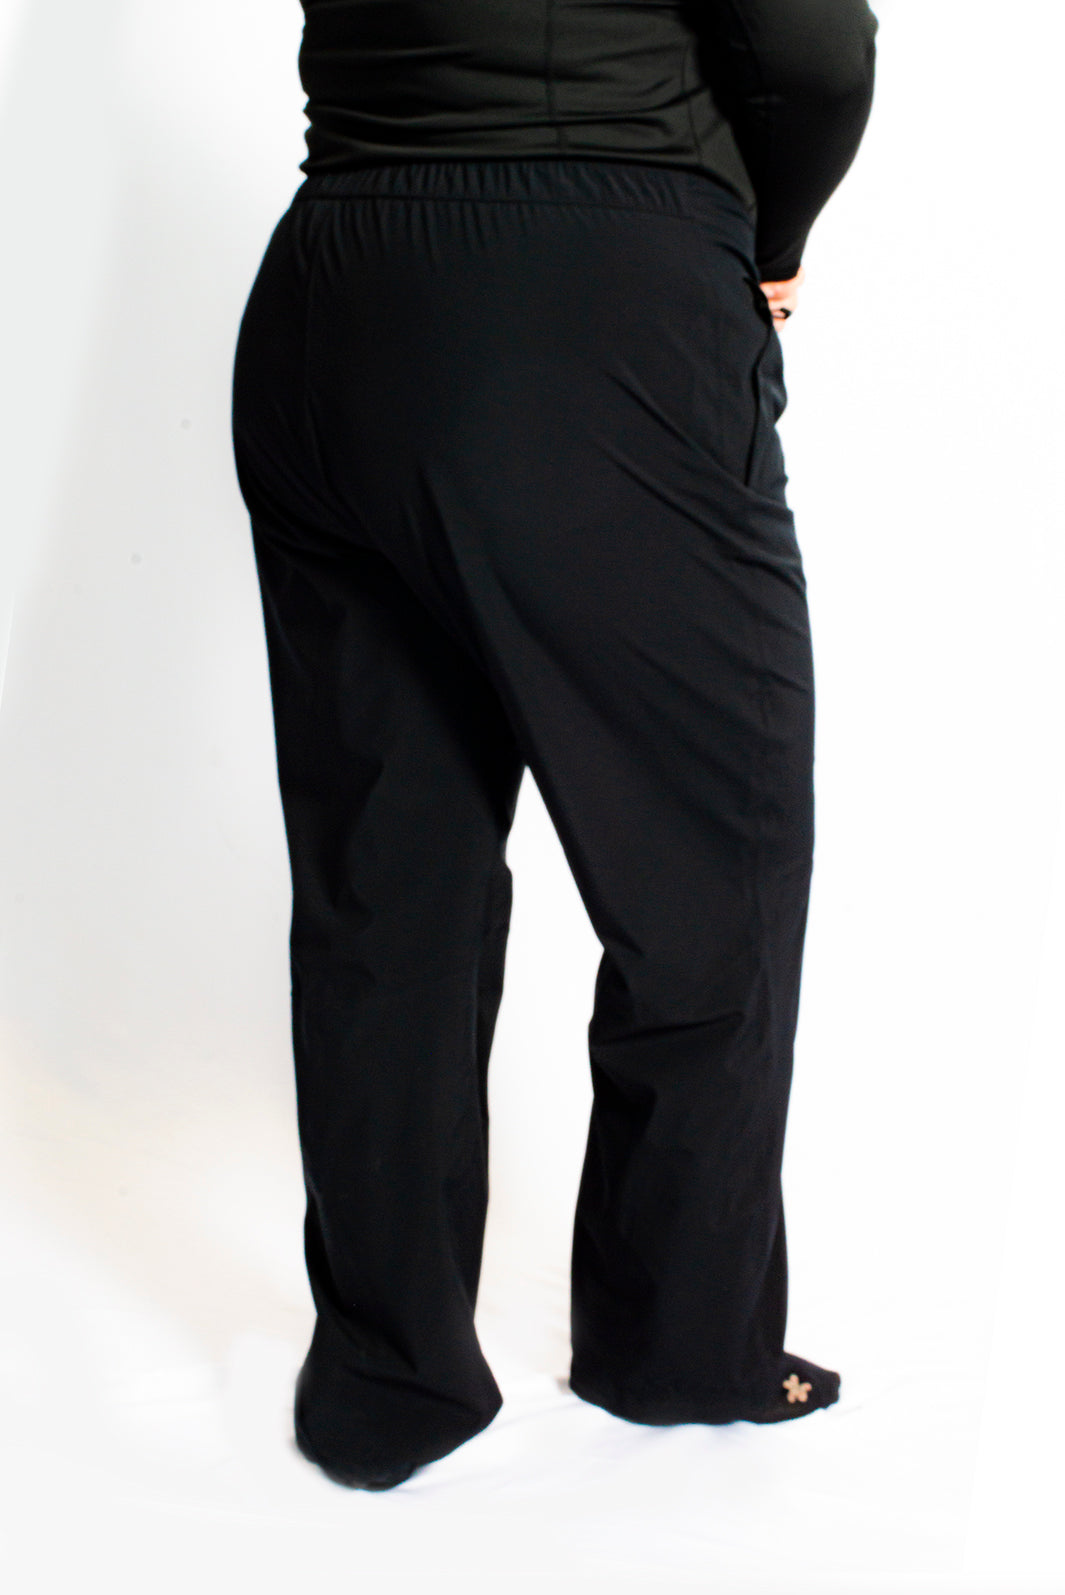 Pantalon Imper-respirant performant SEALED PII Taille Plus de Sportive Plus